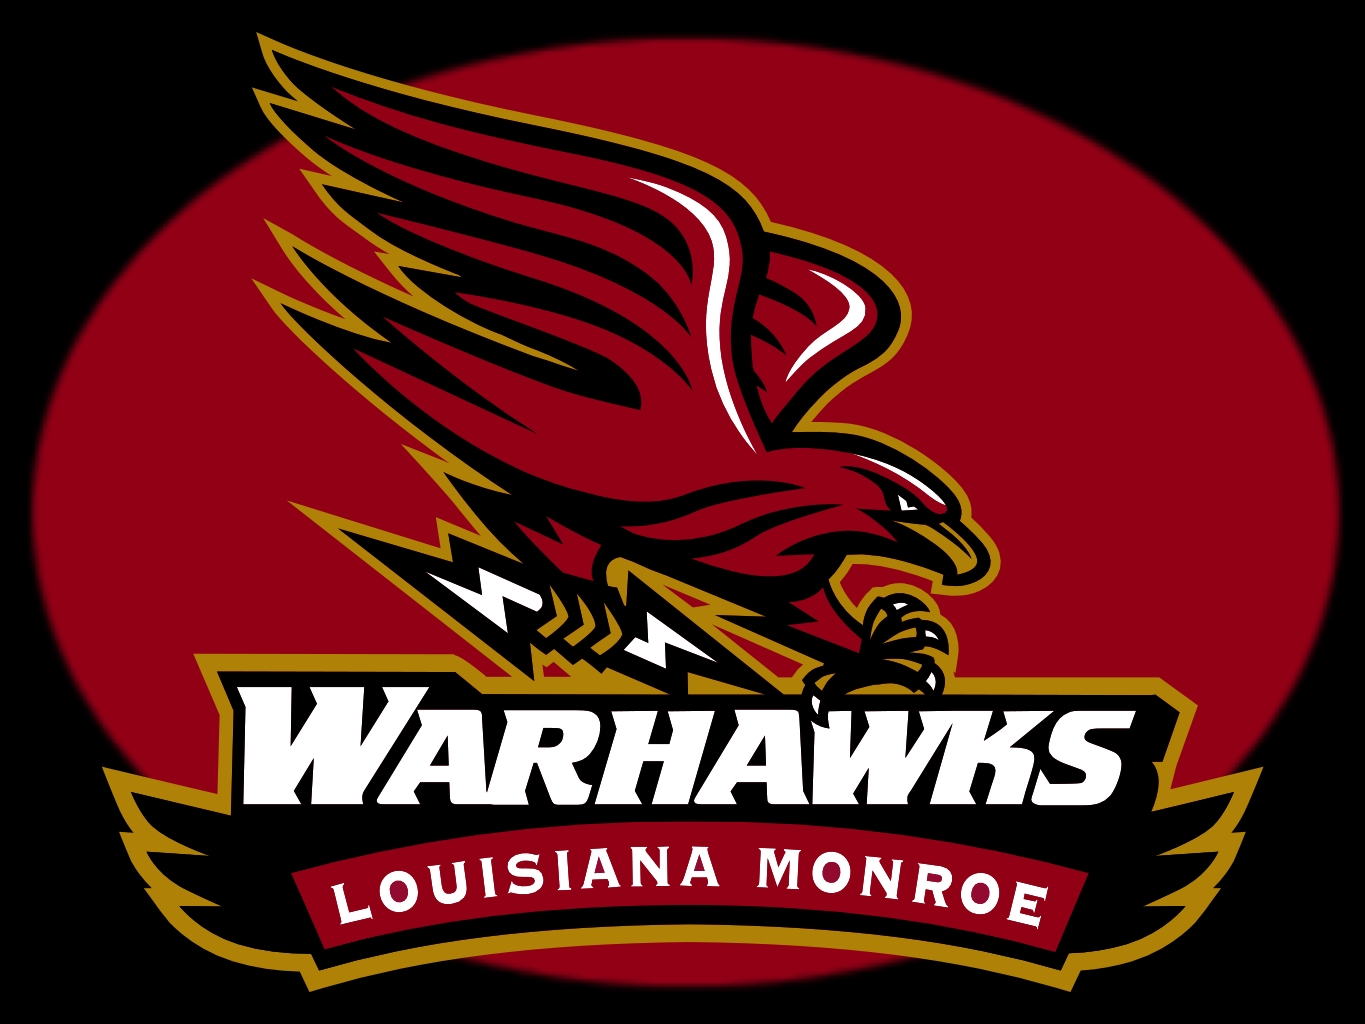 Louisiana Monroe Warhawks Tickets